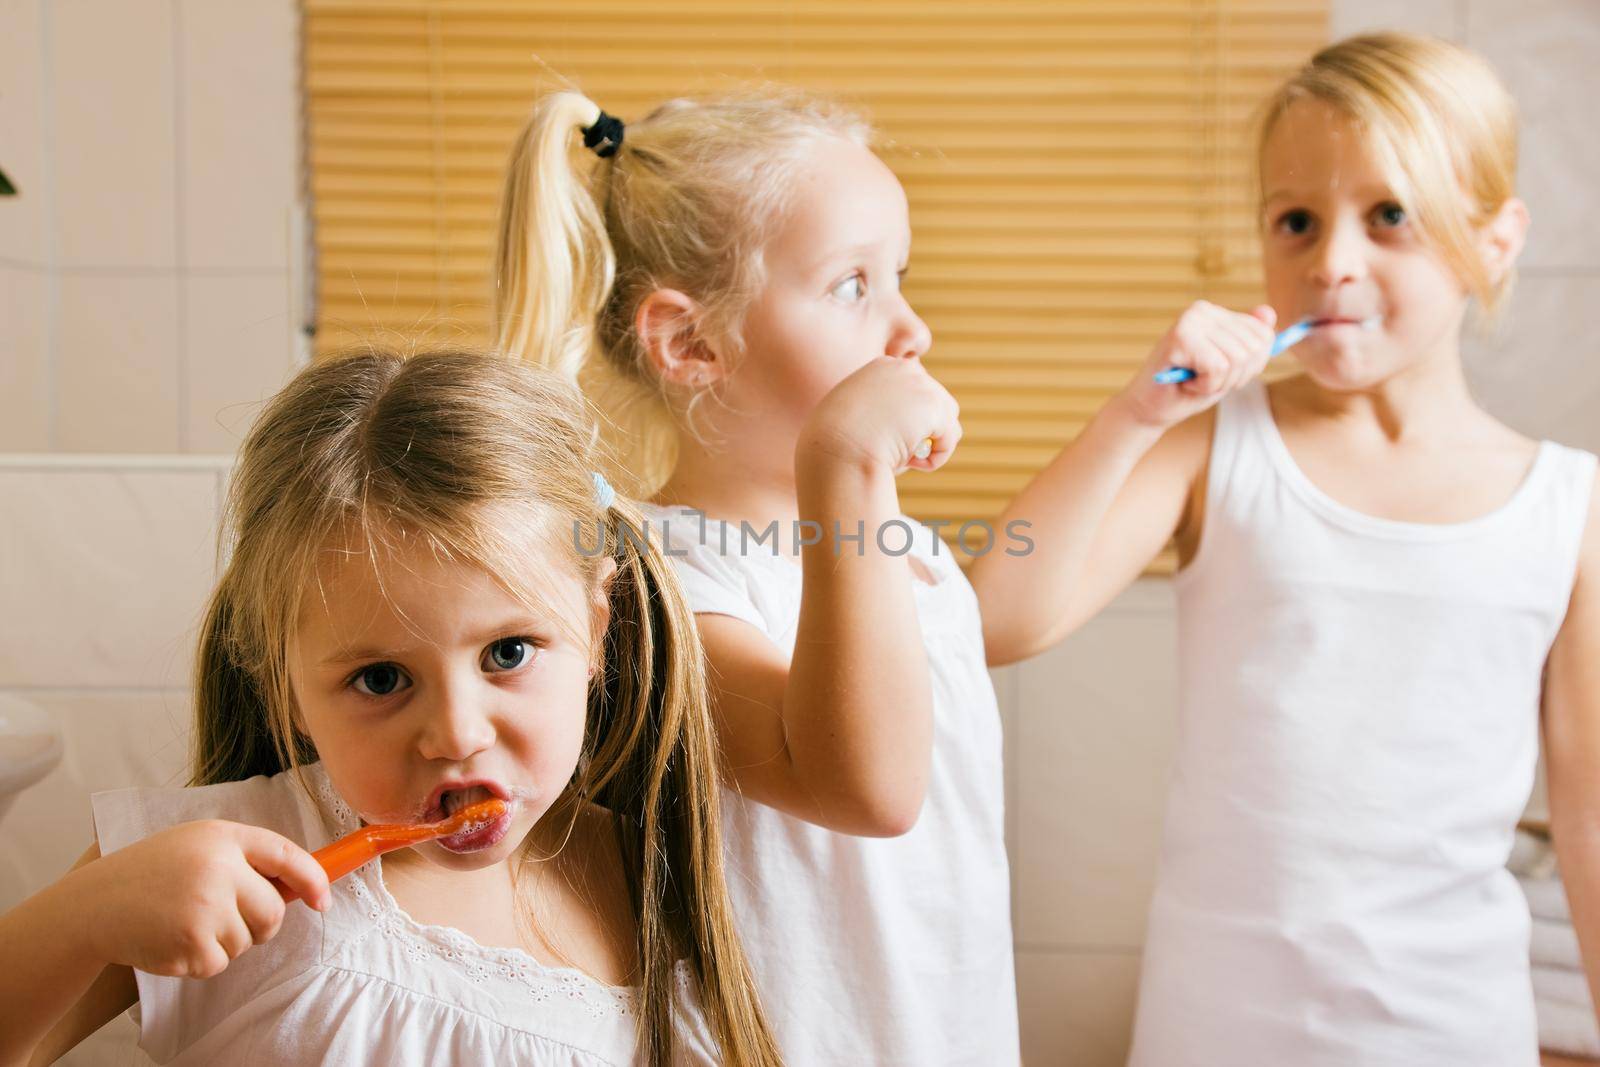 Children brushing teeth by Kzenon